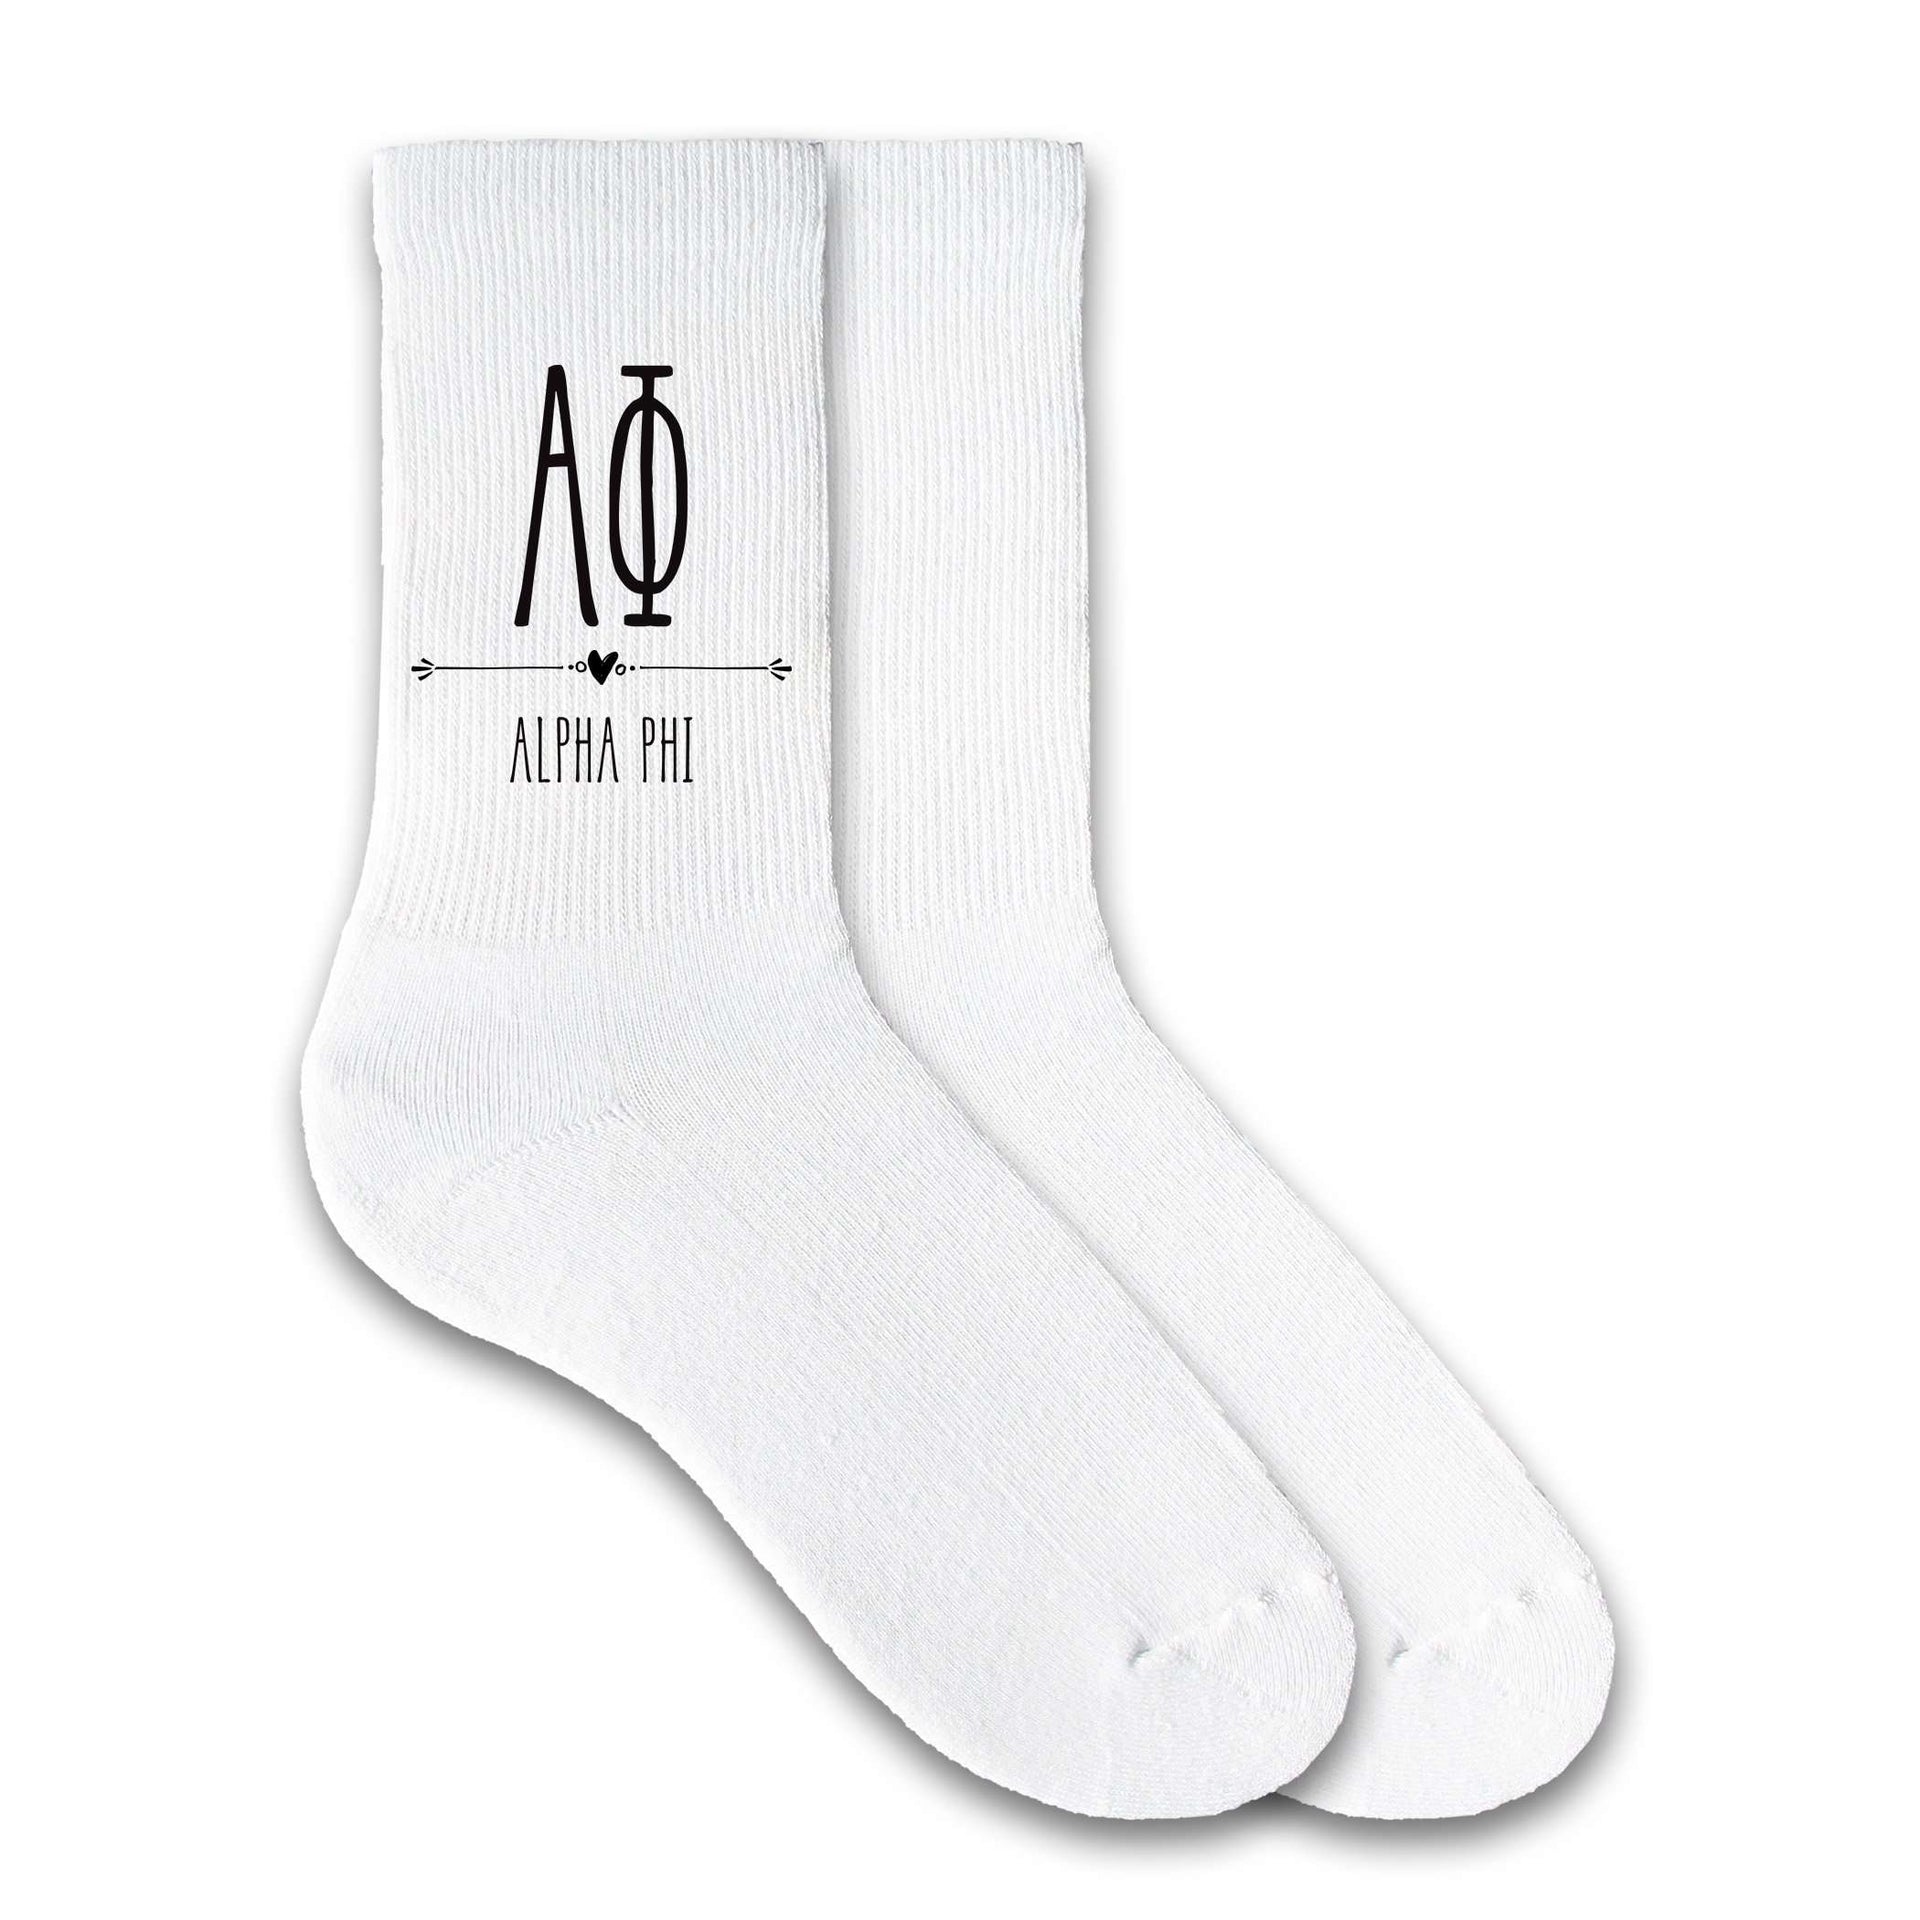 Alpha Phi sorority name and letters custom printed on white cotton crew socks